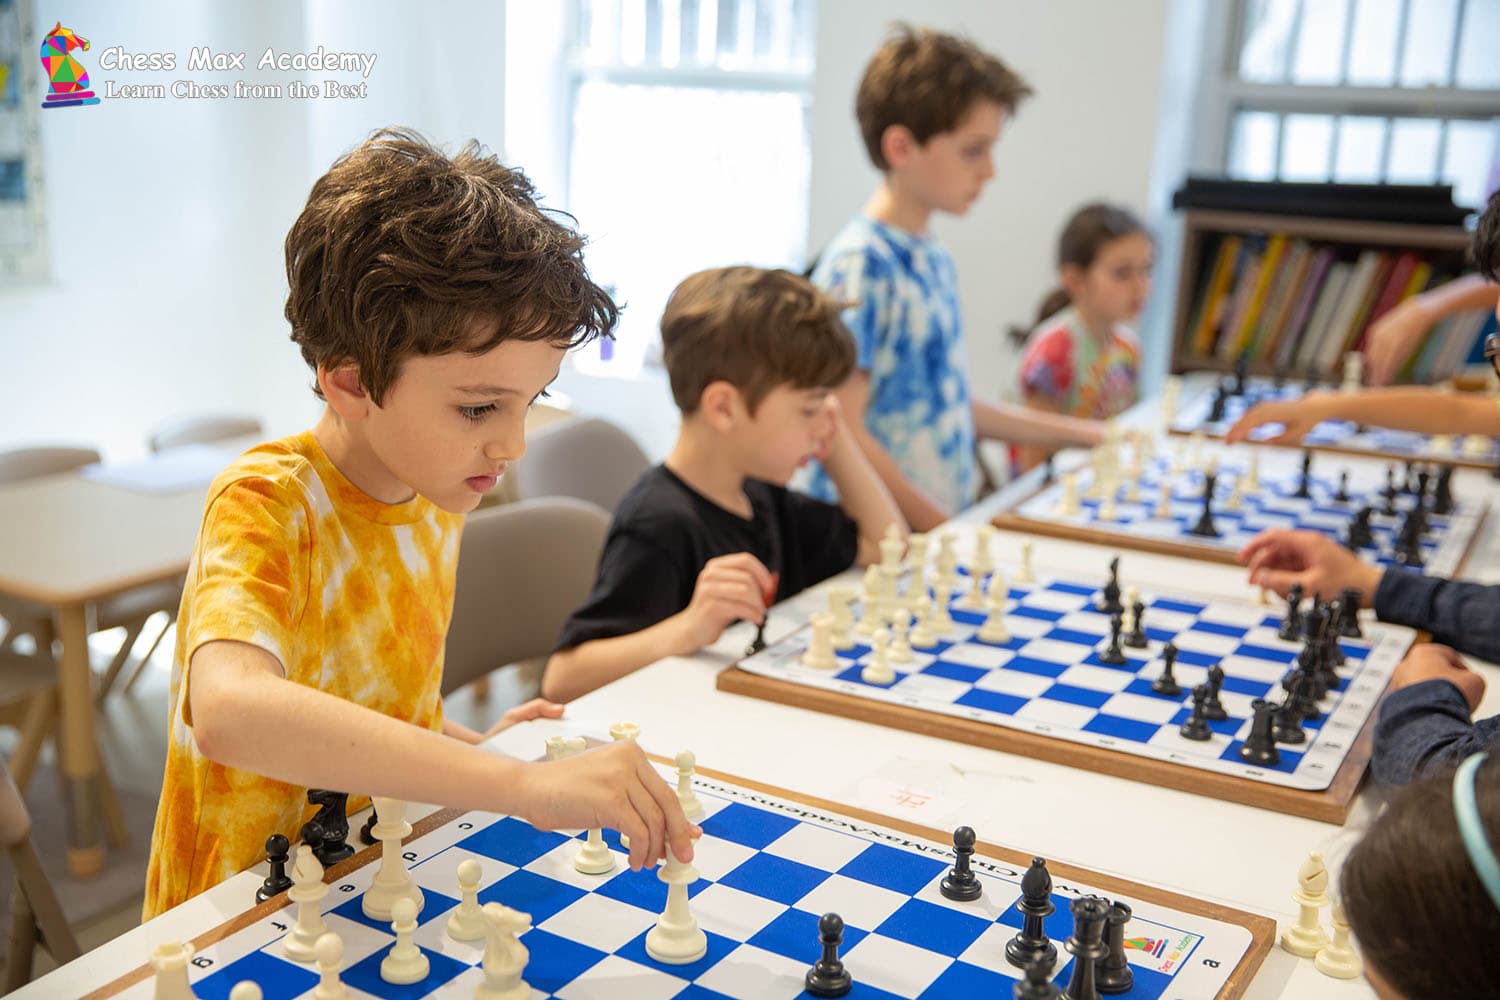 Karpov Chess School  Learn chess the easy way